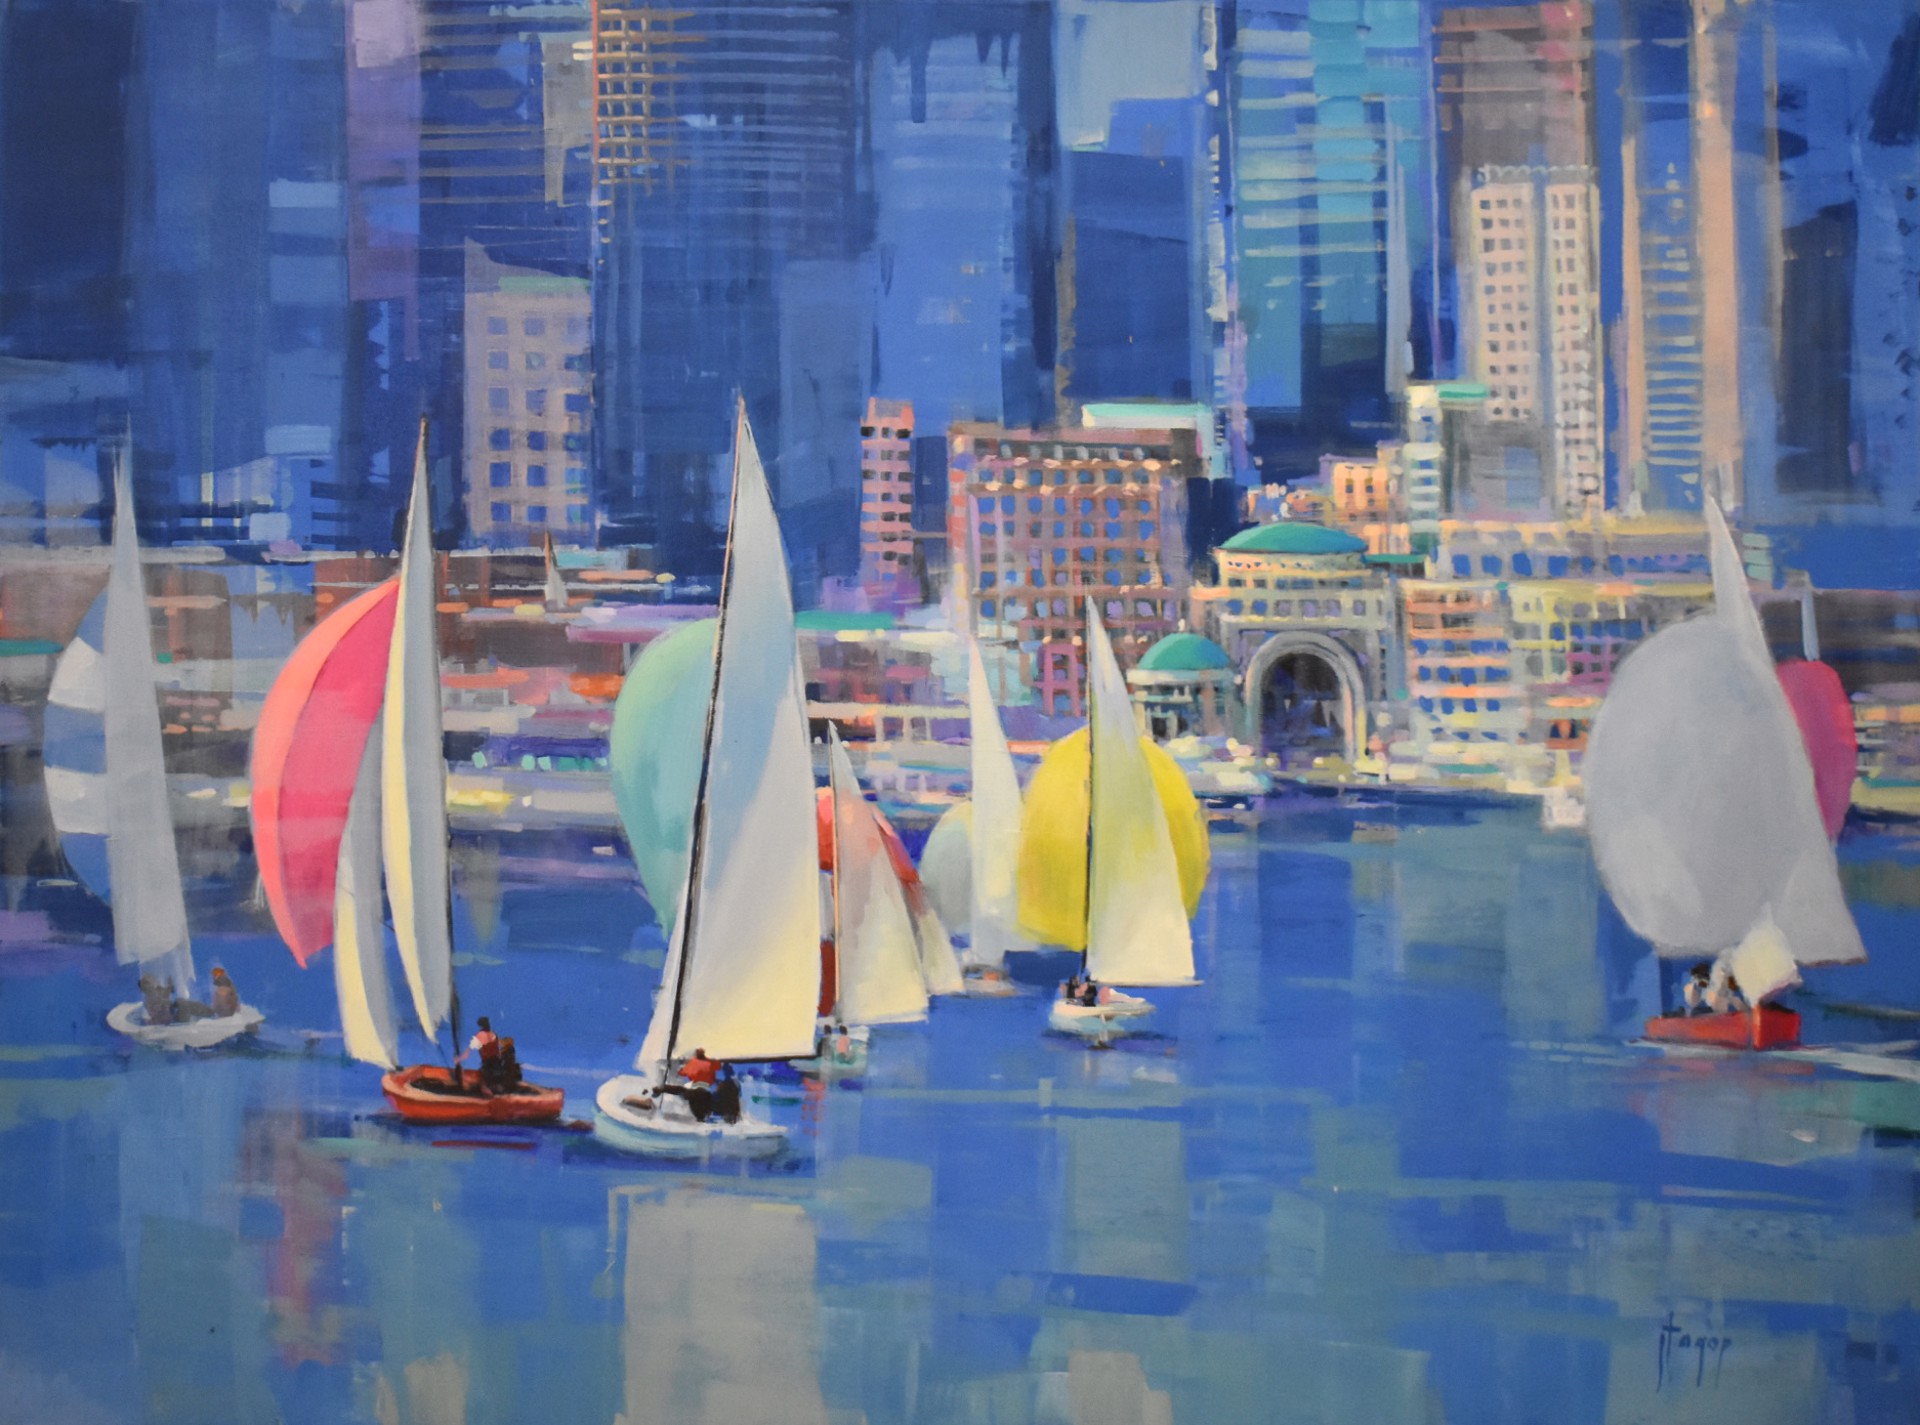 Sailing on the Charles - Boston by Hagop Keledjian